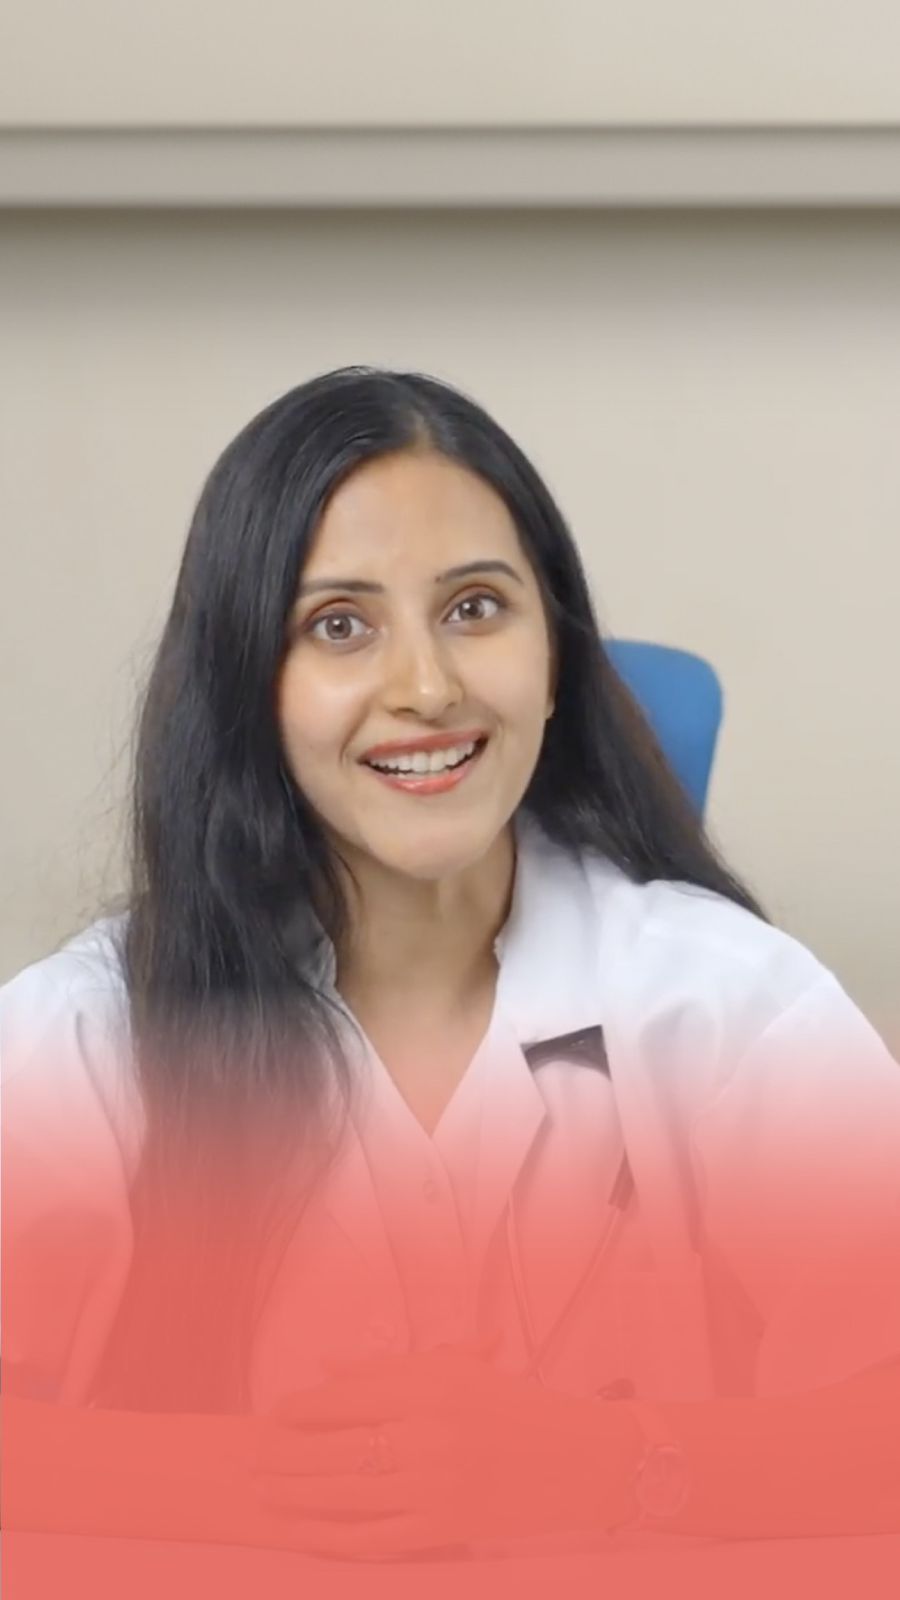 Doctor Review Video For Vatsyayan Plus Capsules